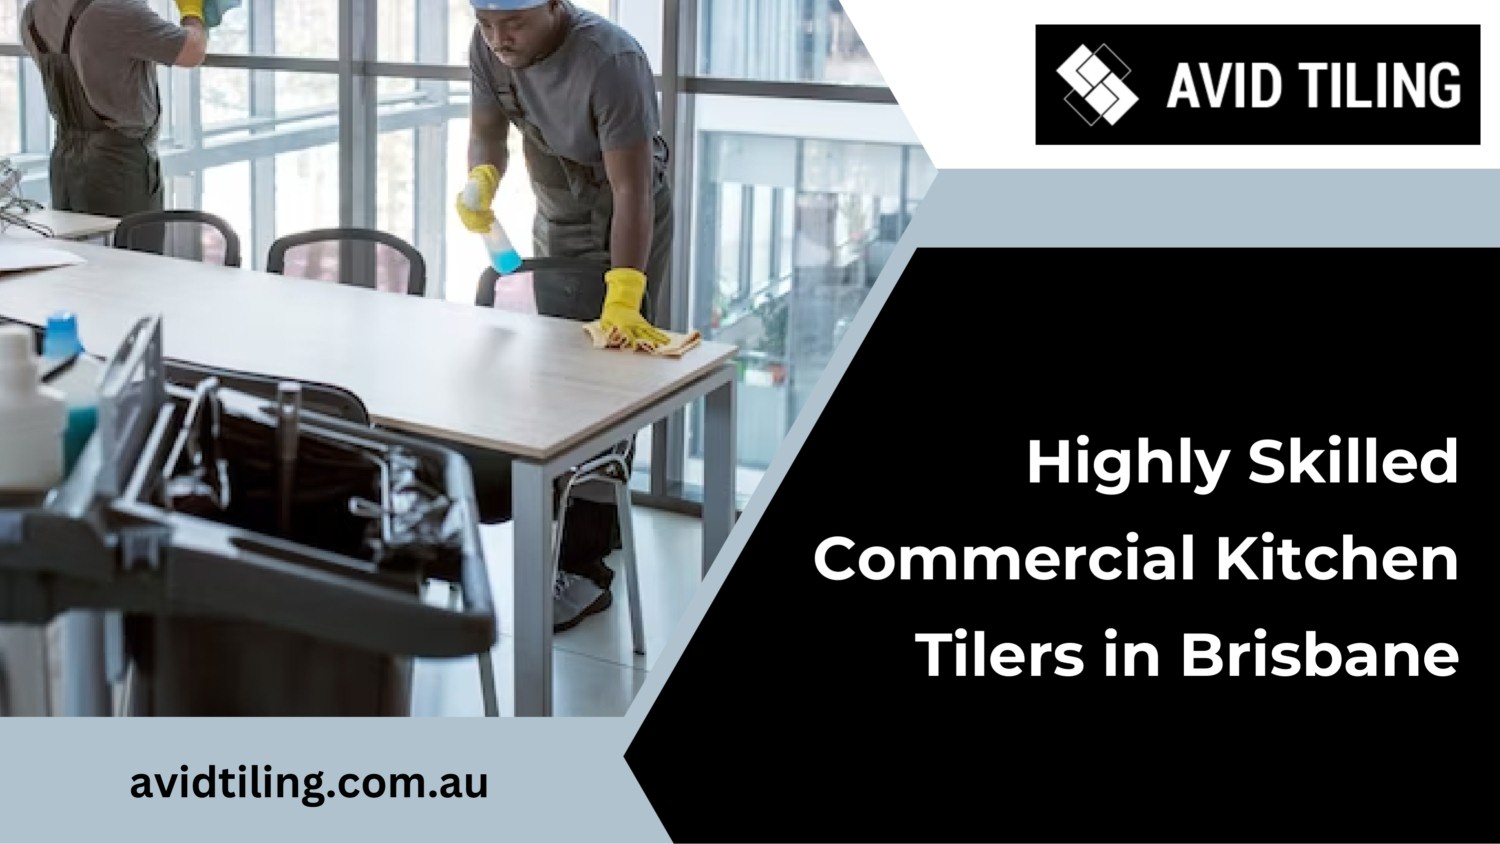 Highly Skilled Commercial Kitchen Tilers in Brisbane